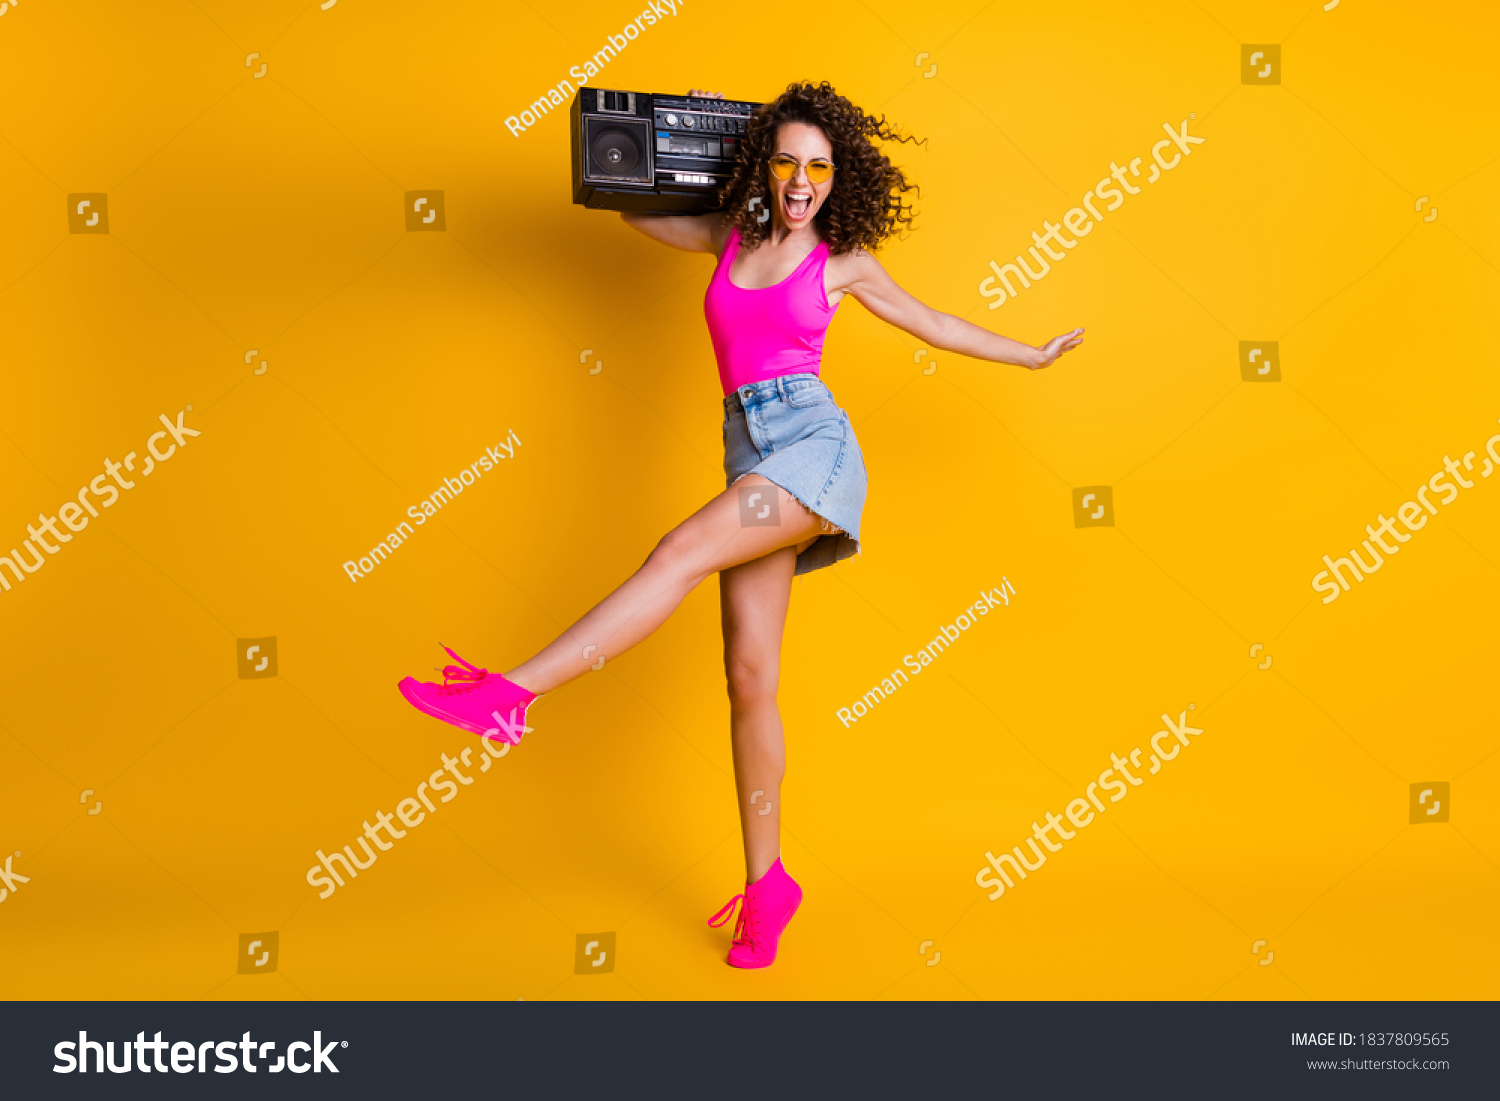 3,957 Girl recorder Images, Stock Photos & Vectors | Shutterstock